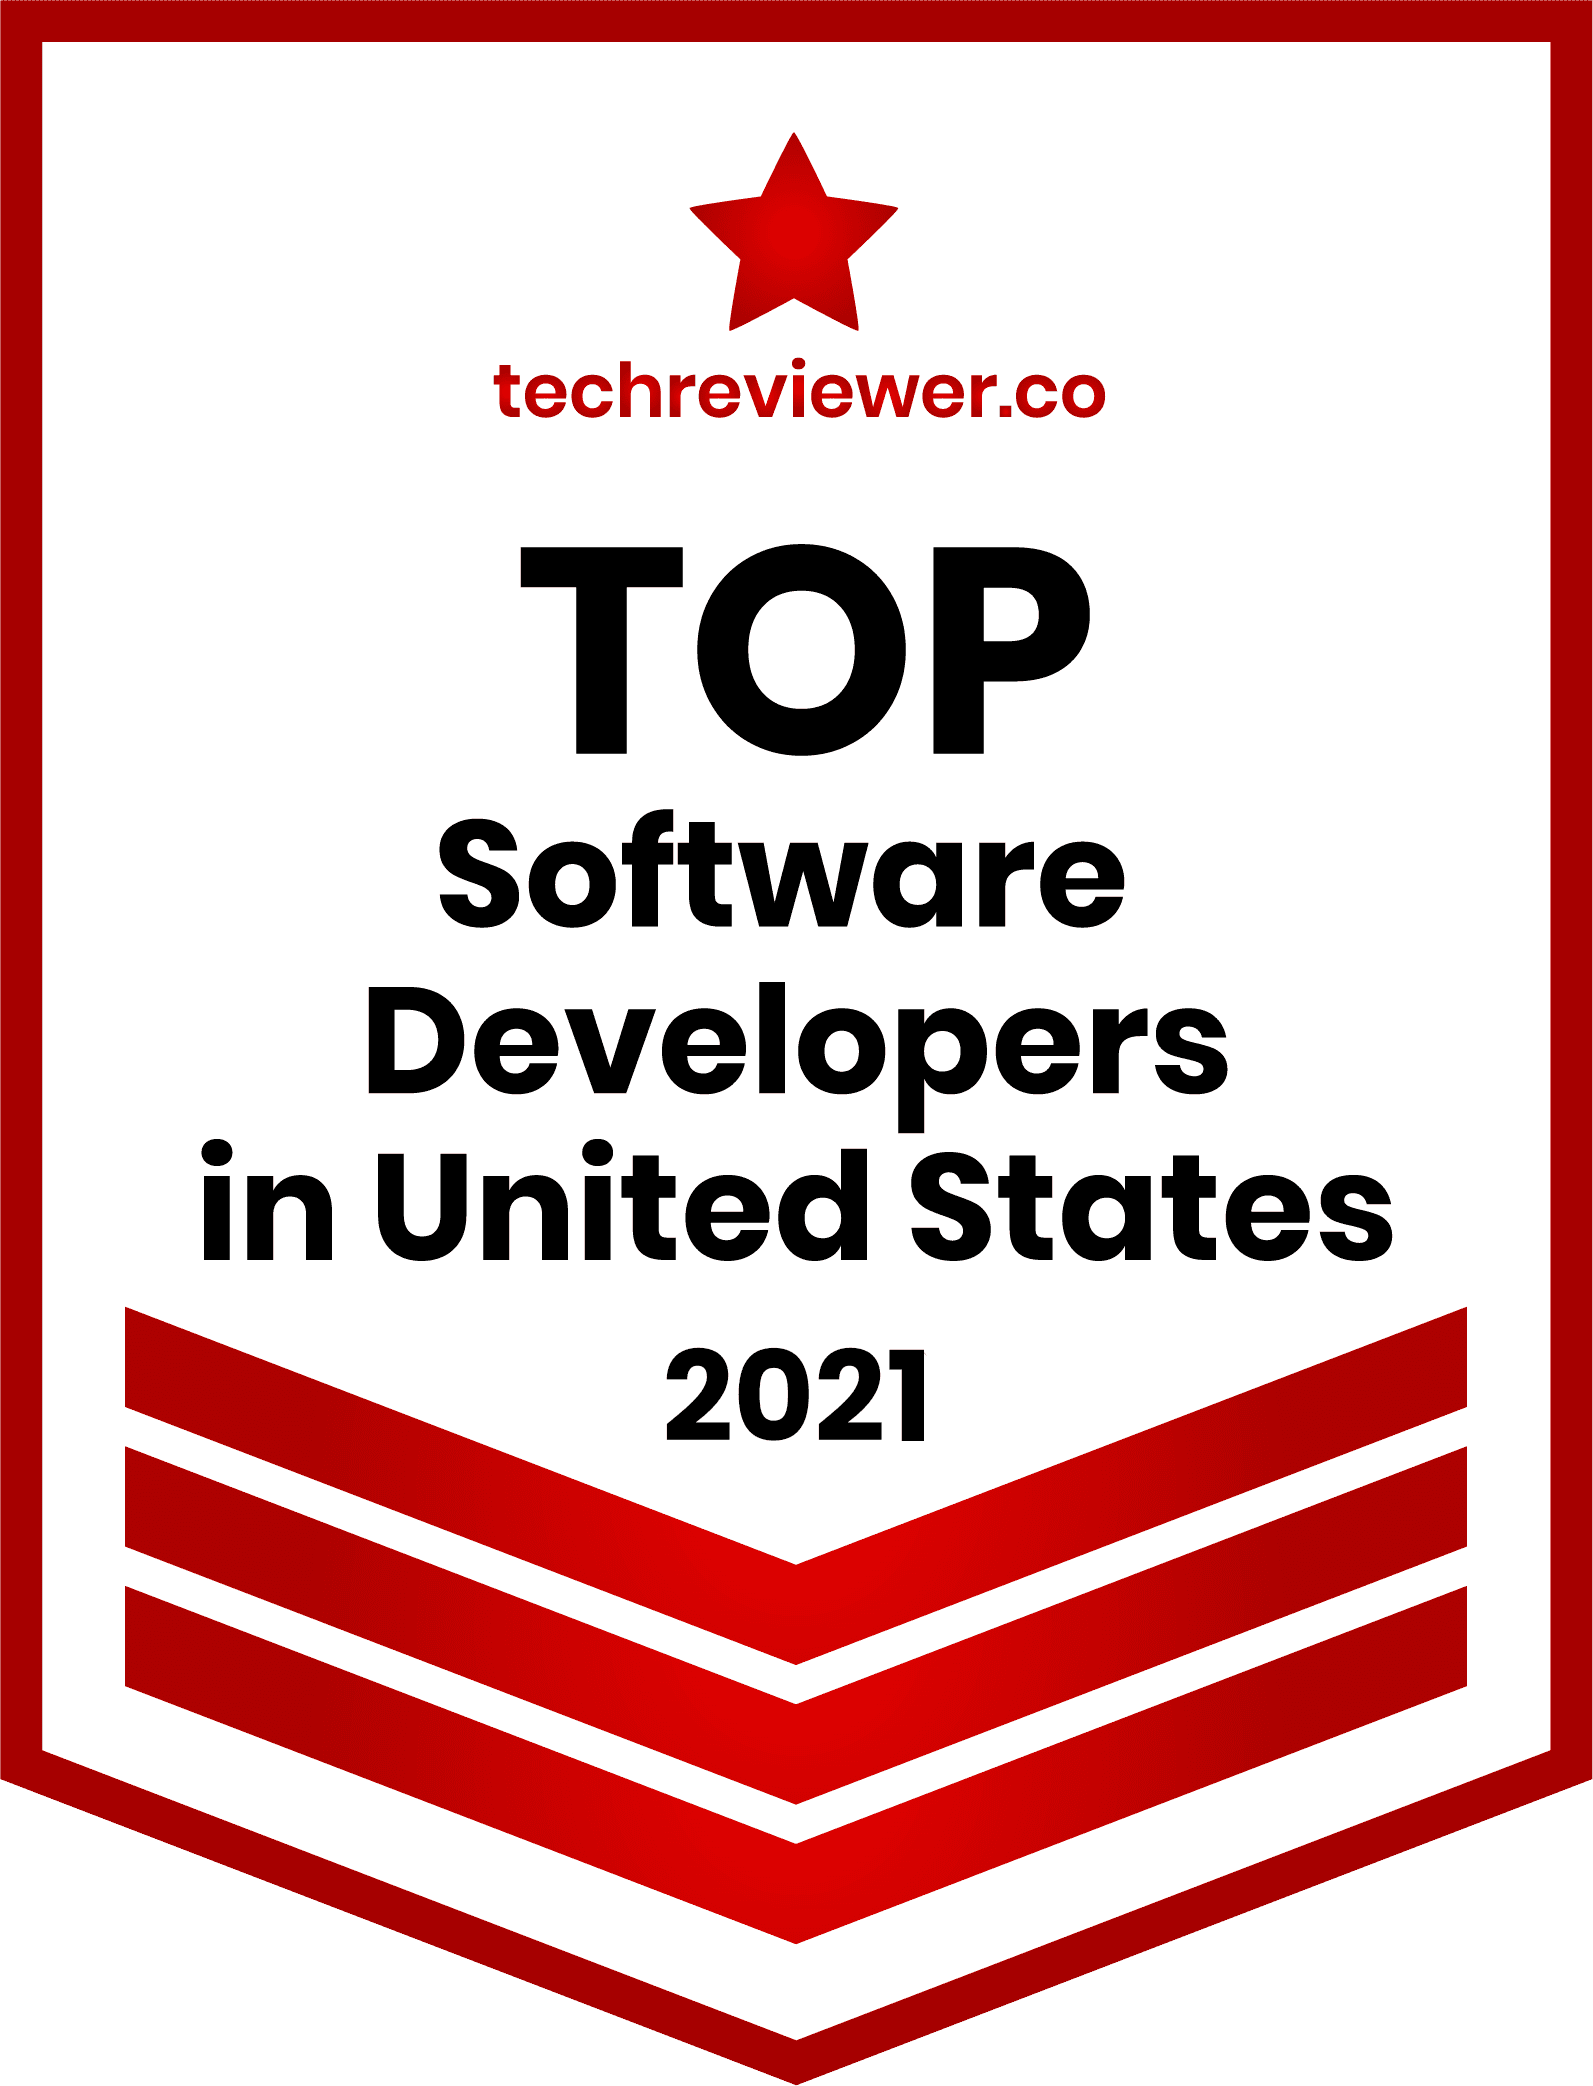 Top software developers 2021